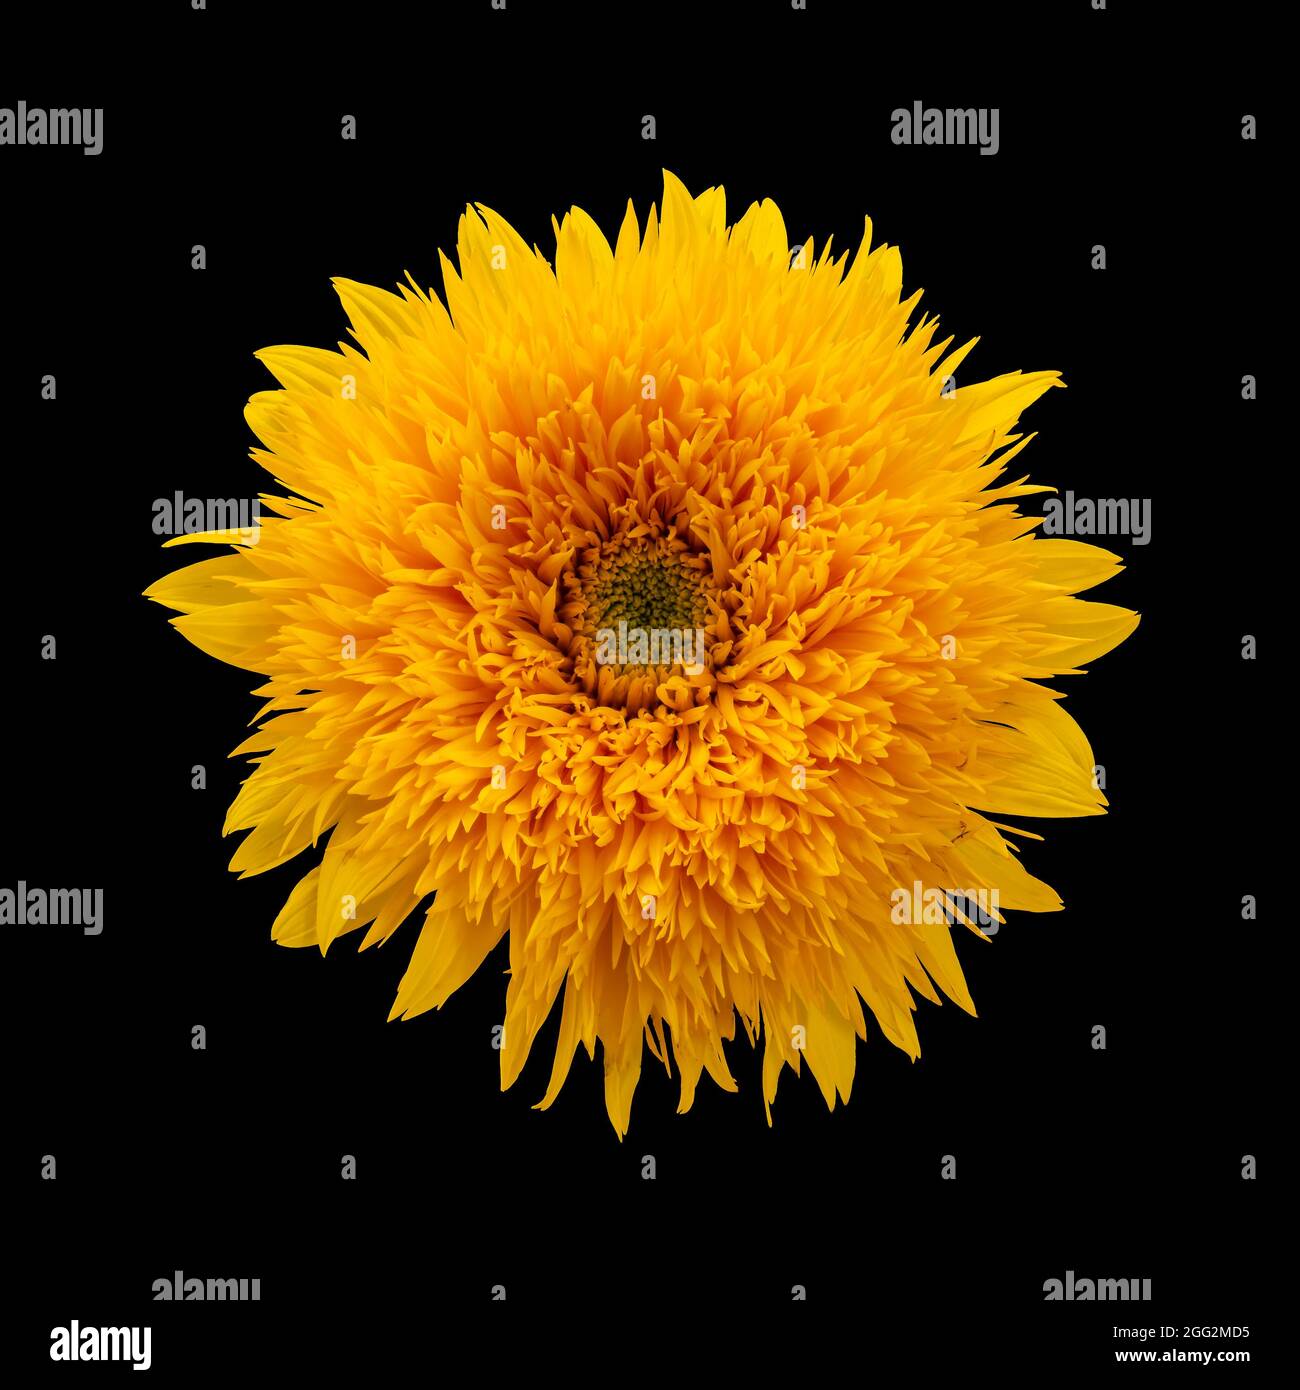 single isolated yellow orange sunflower Teddy Bear, blossom macro on black background,  fine art still life blossom with detailed texture Stock Photo